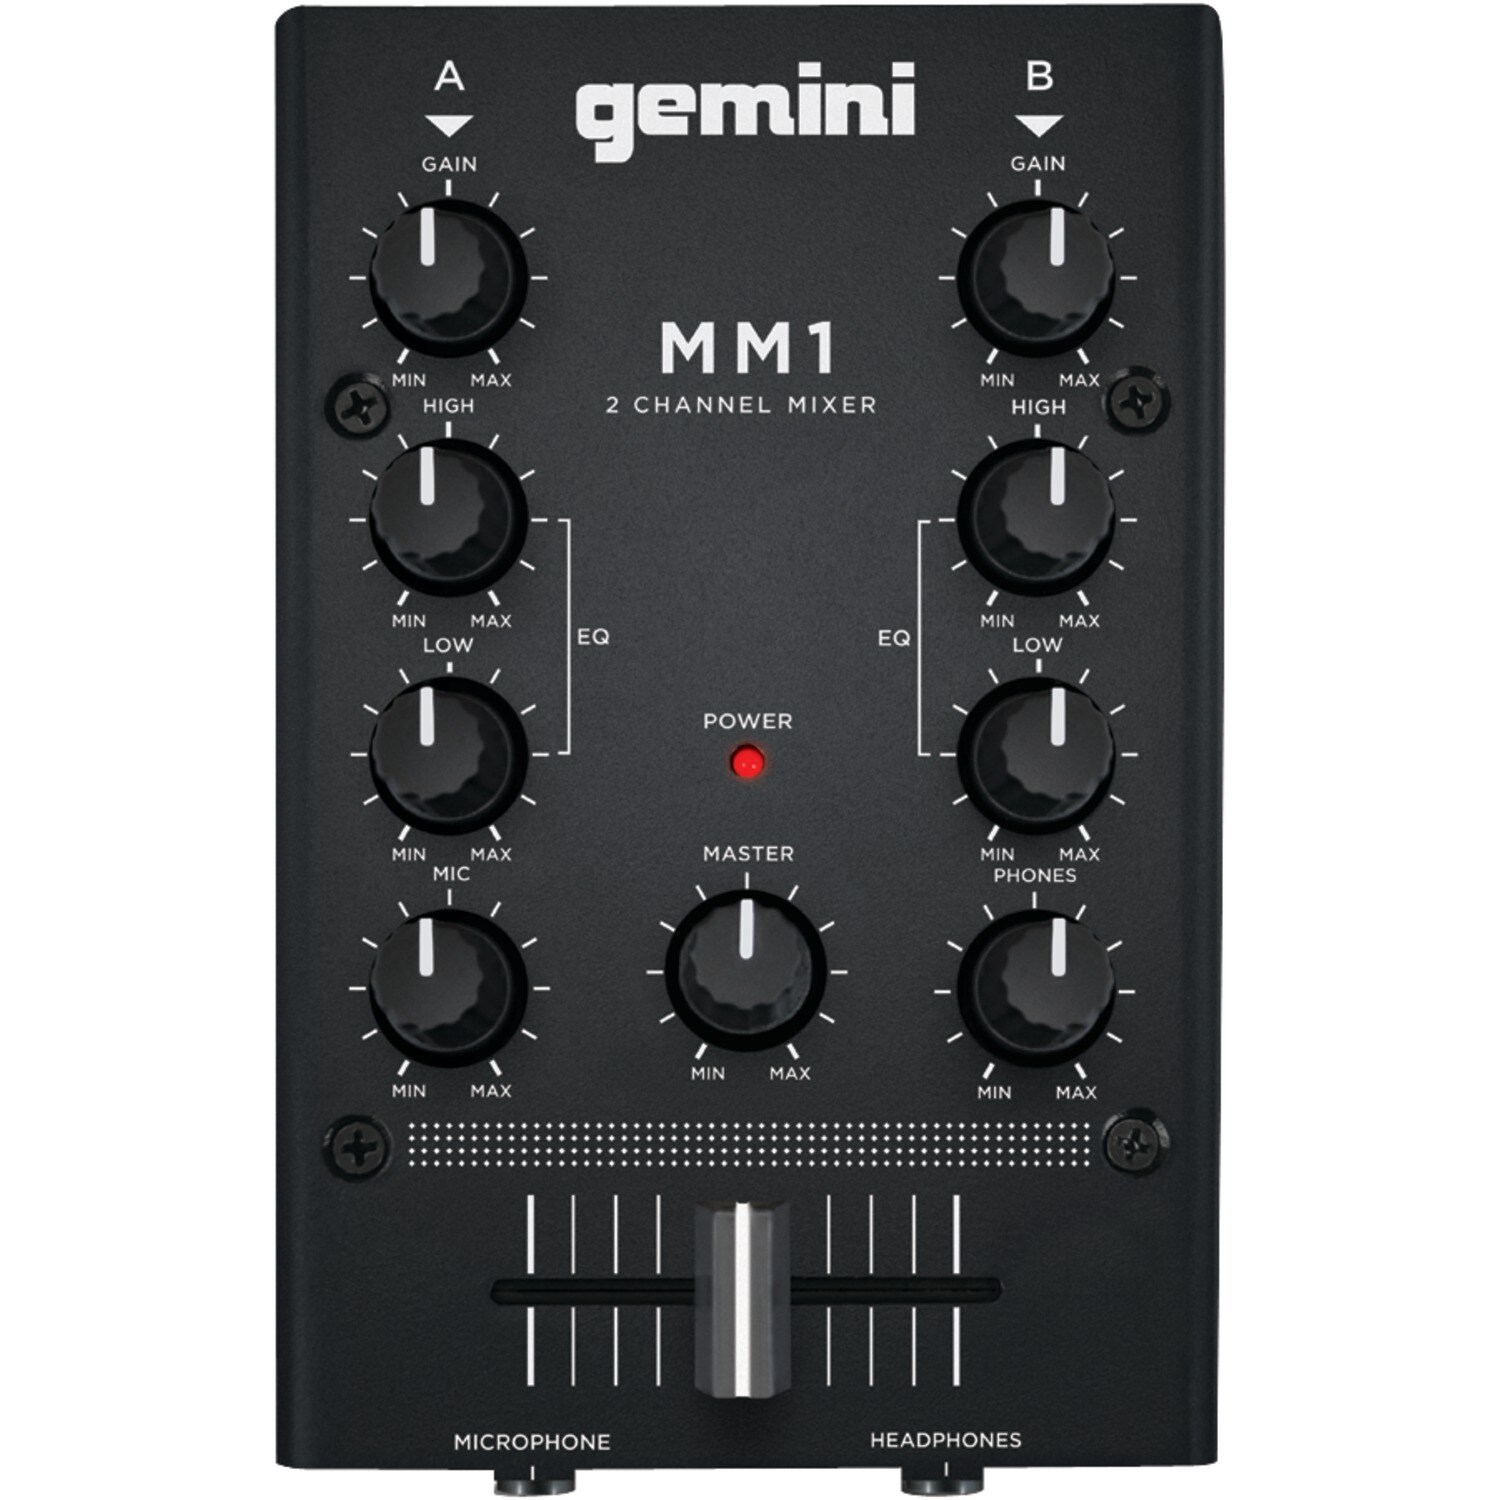 Gemini Analog DJ Audio Mixer at